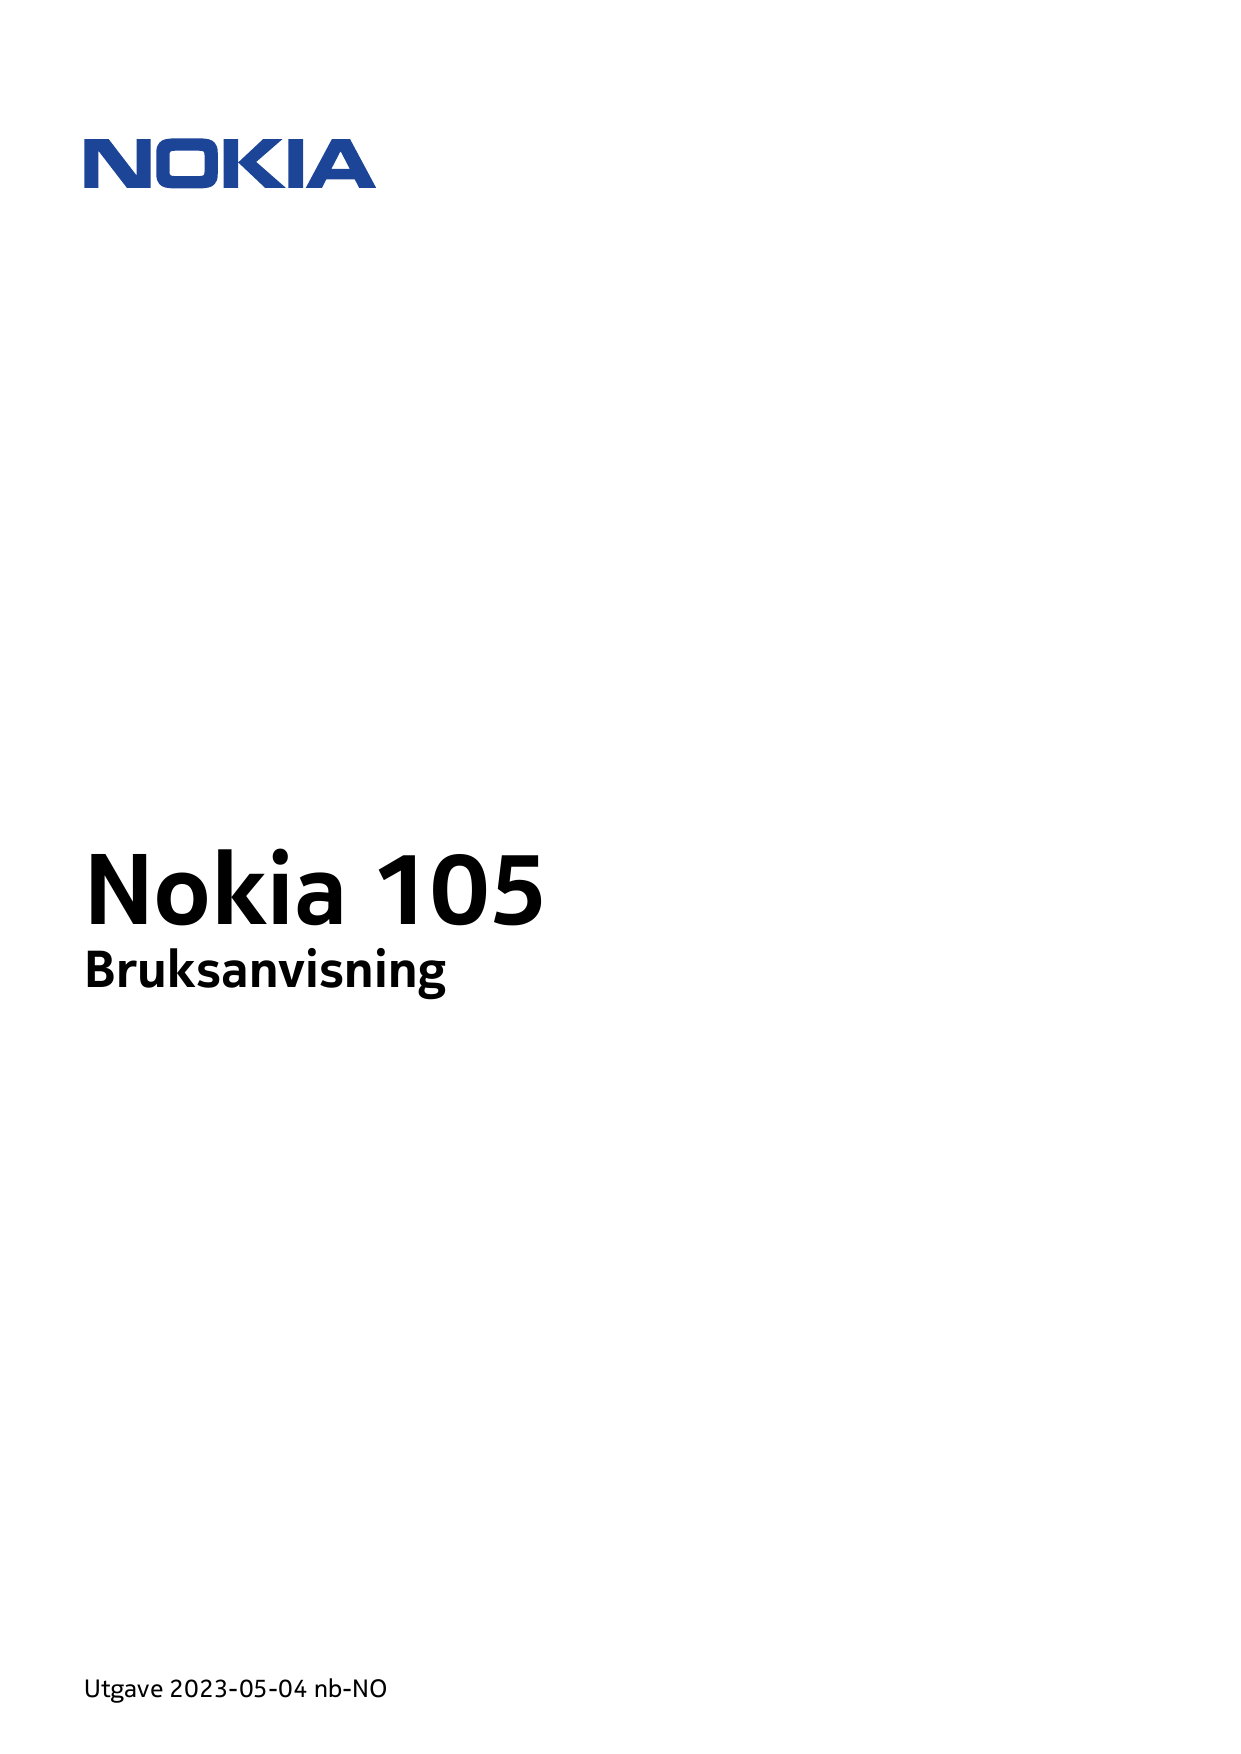 Nokia 105BruksanvisningUtgave 2023-05-04 nb-NO